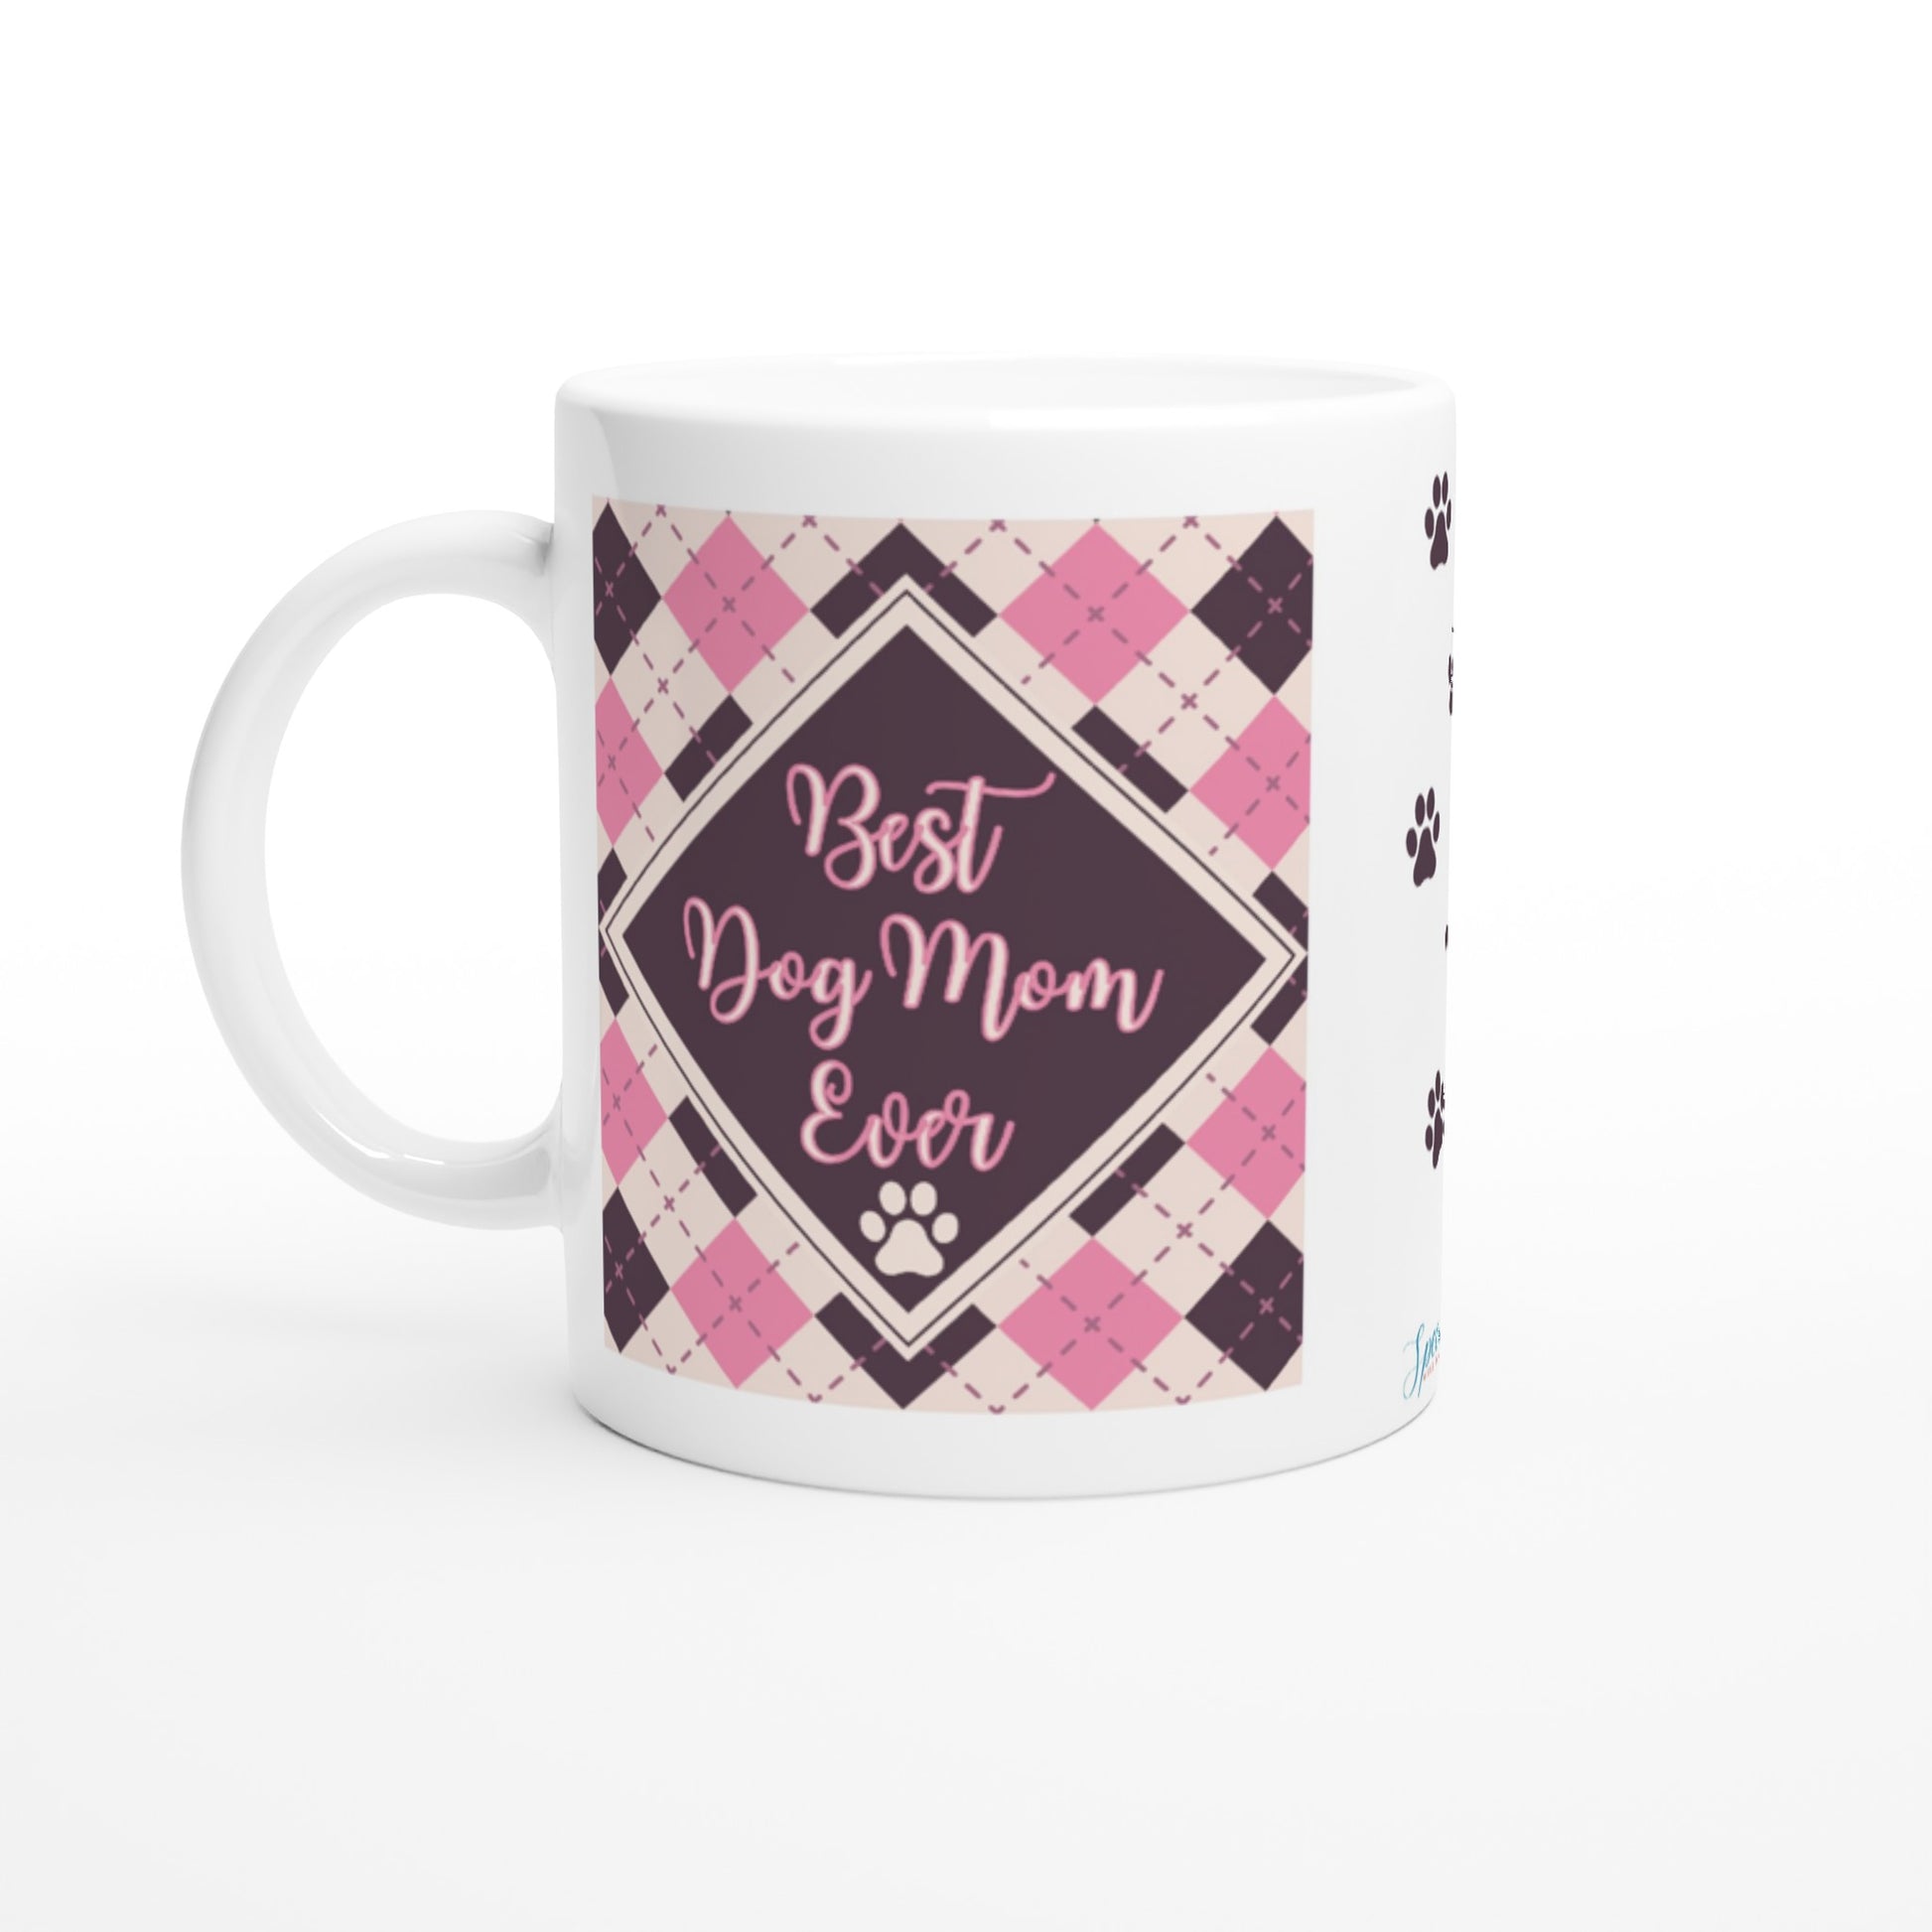 "Best Dog Mom Ever" Customizable Photo & Name 11 oz. Mug front view